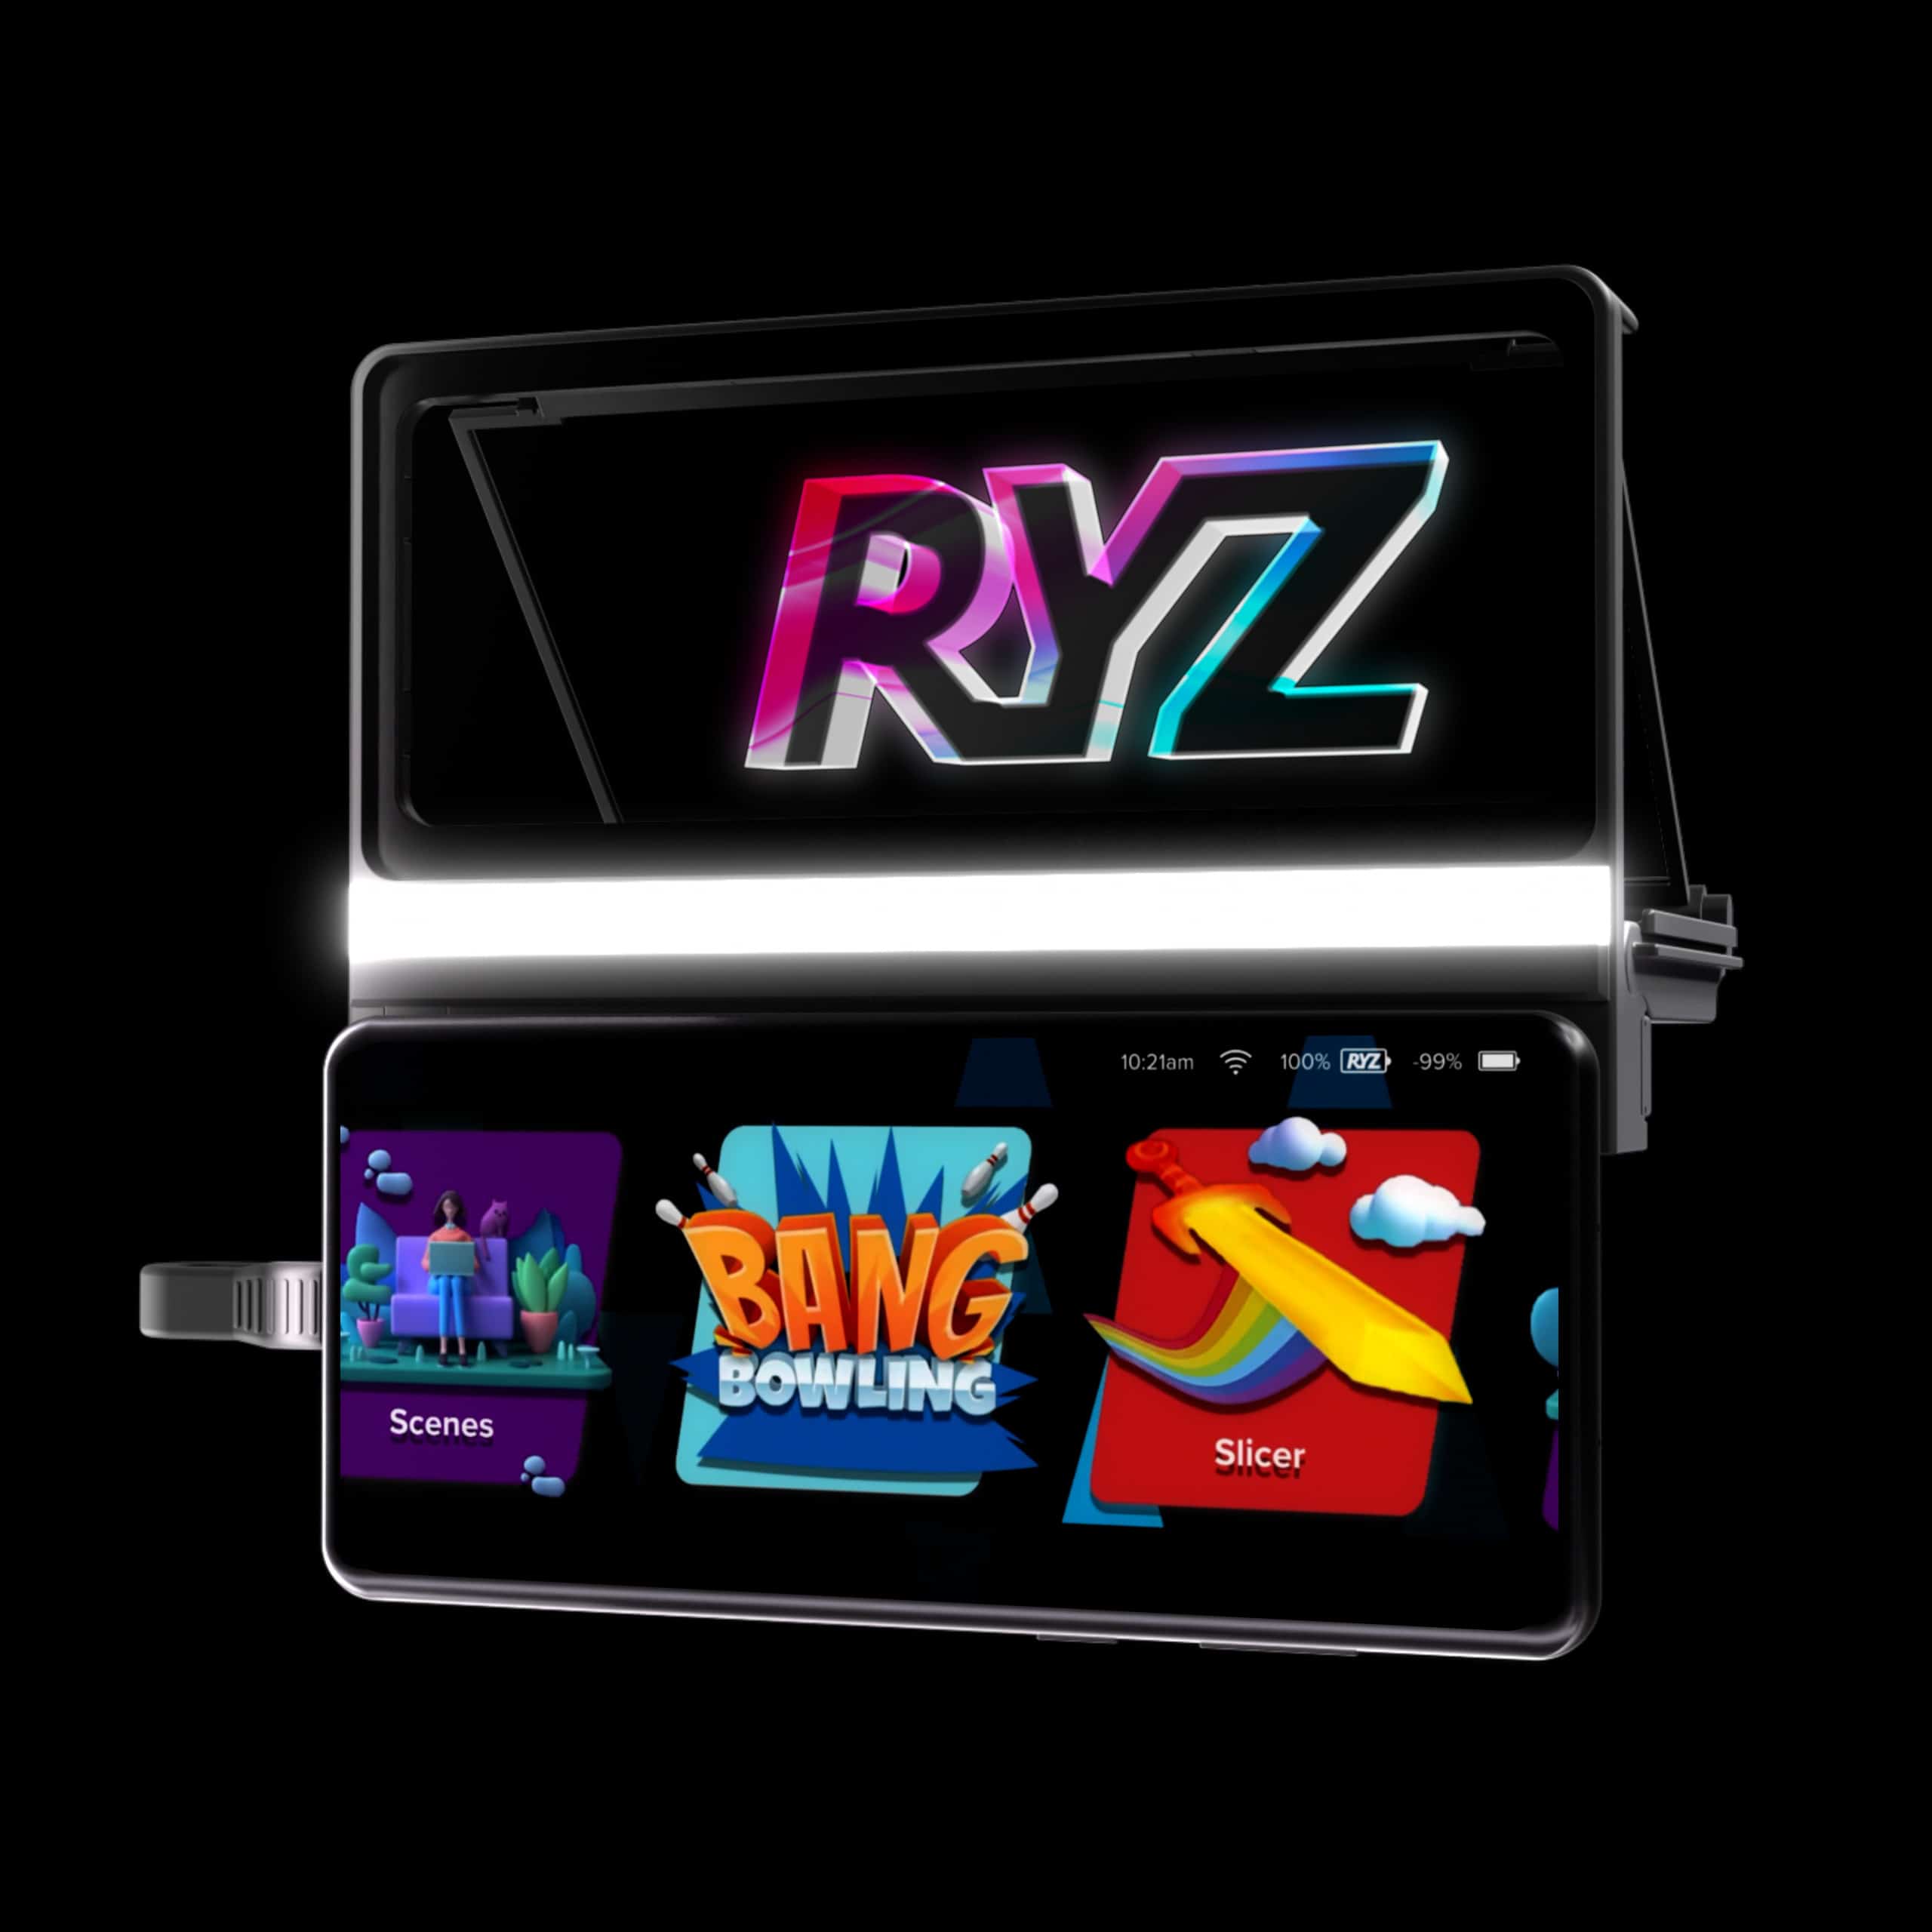 IKIN's RYZ Mobile Holographic Display